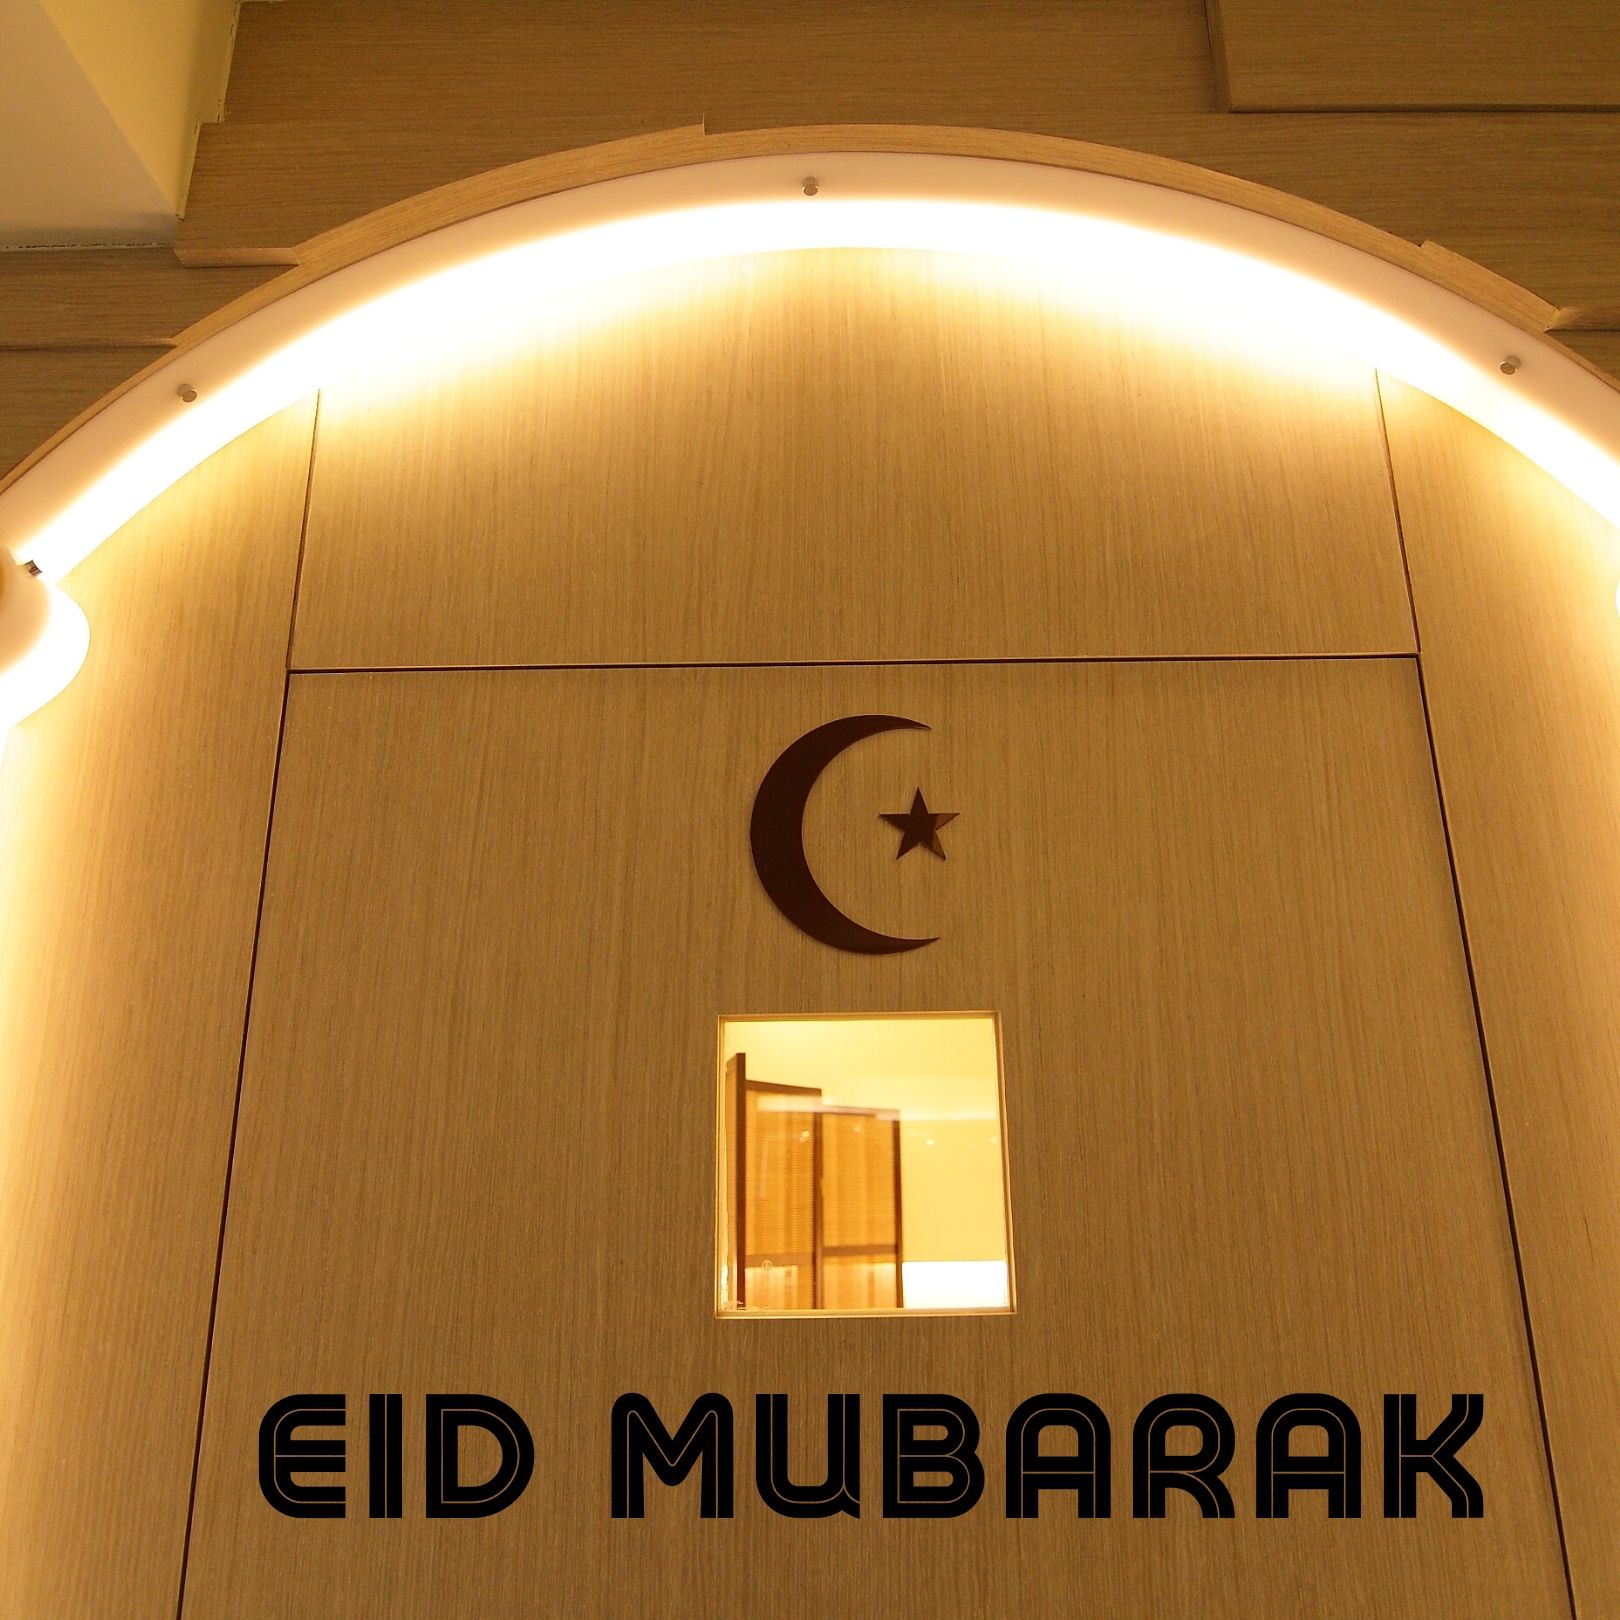 Eid Mubarak Chand with star image